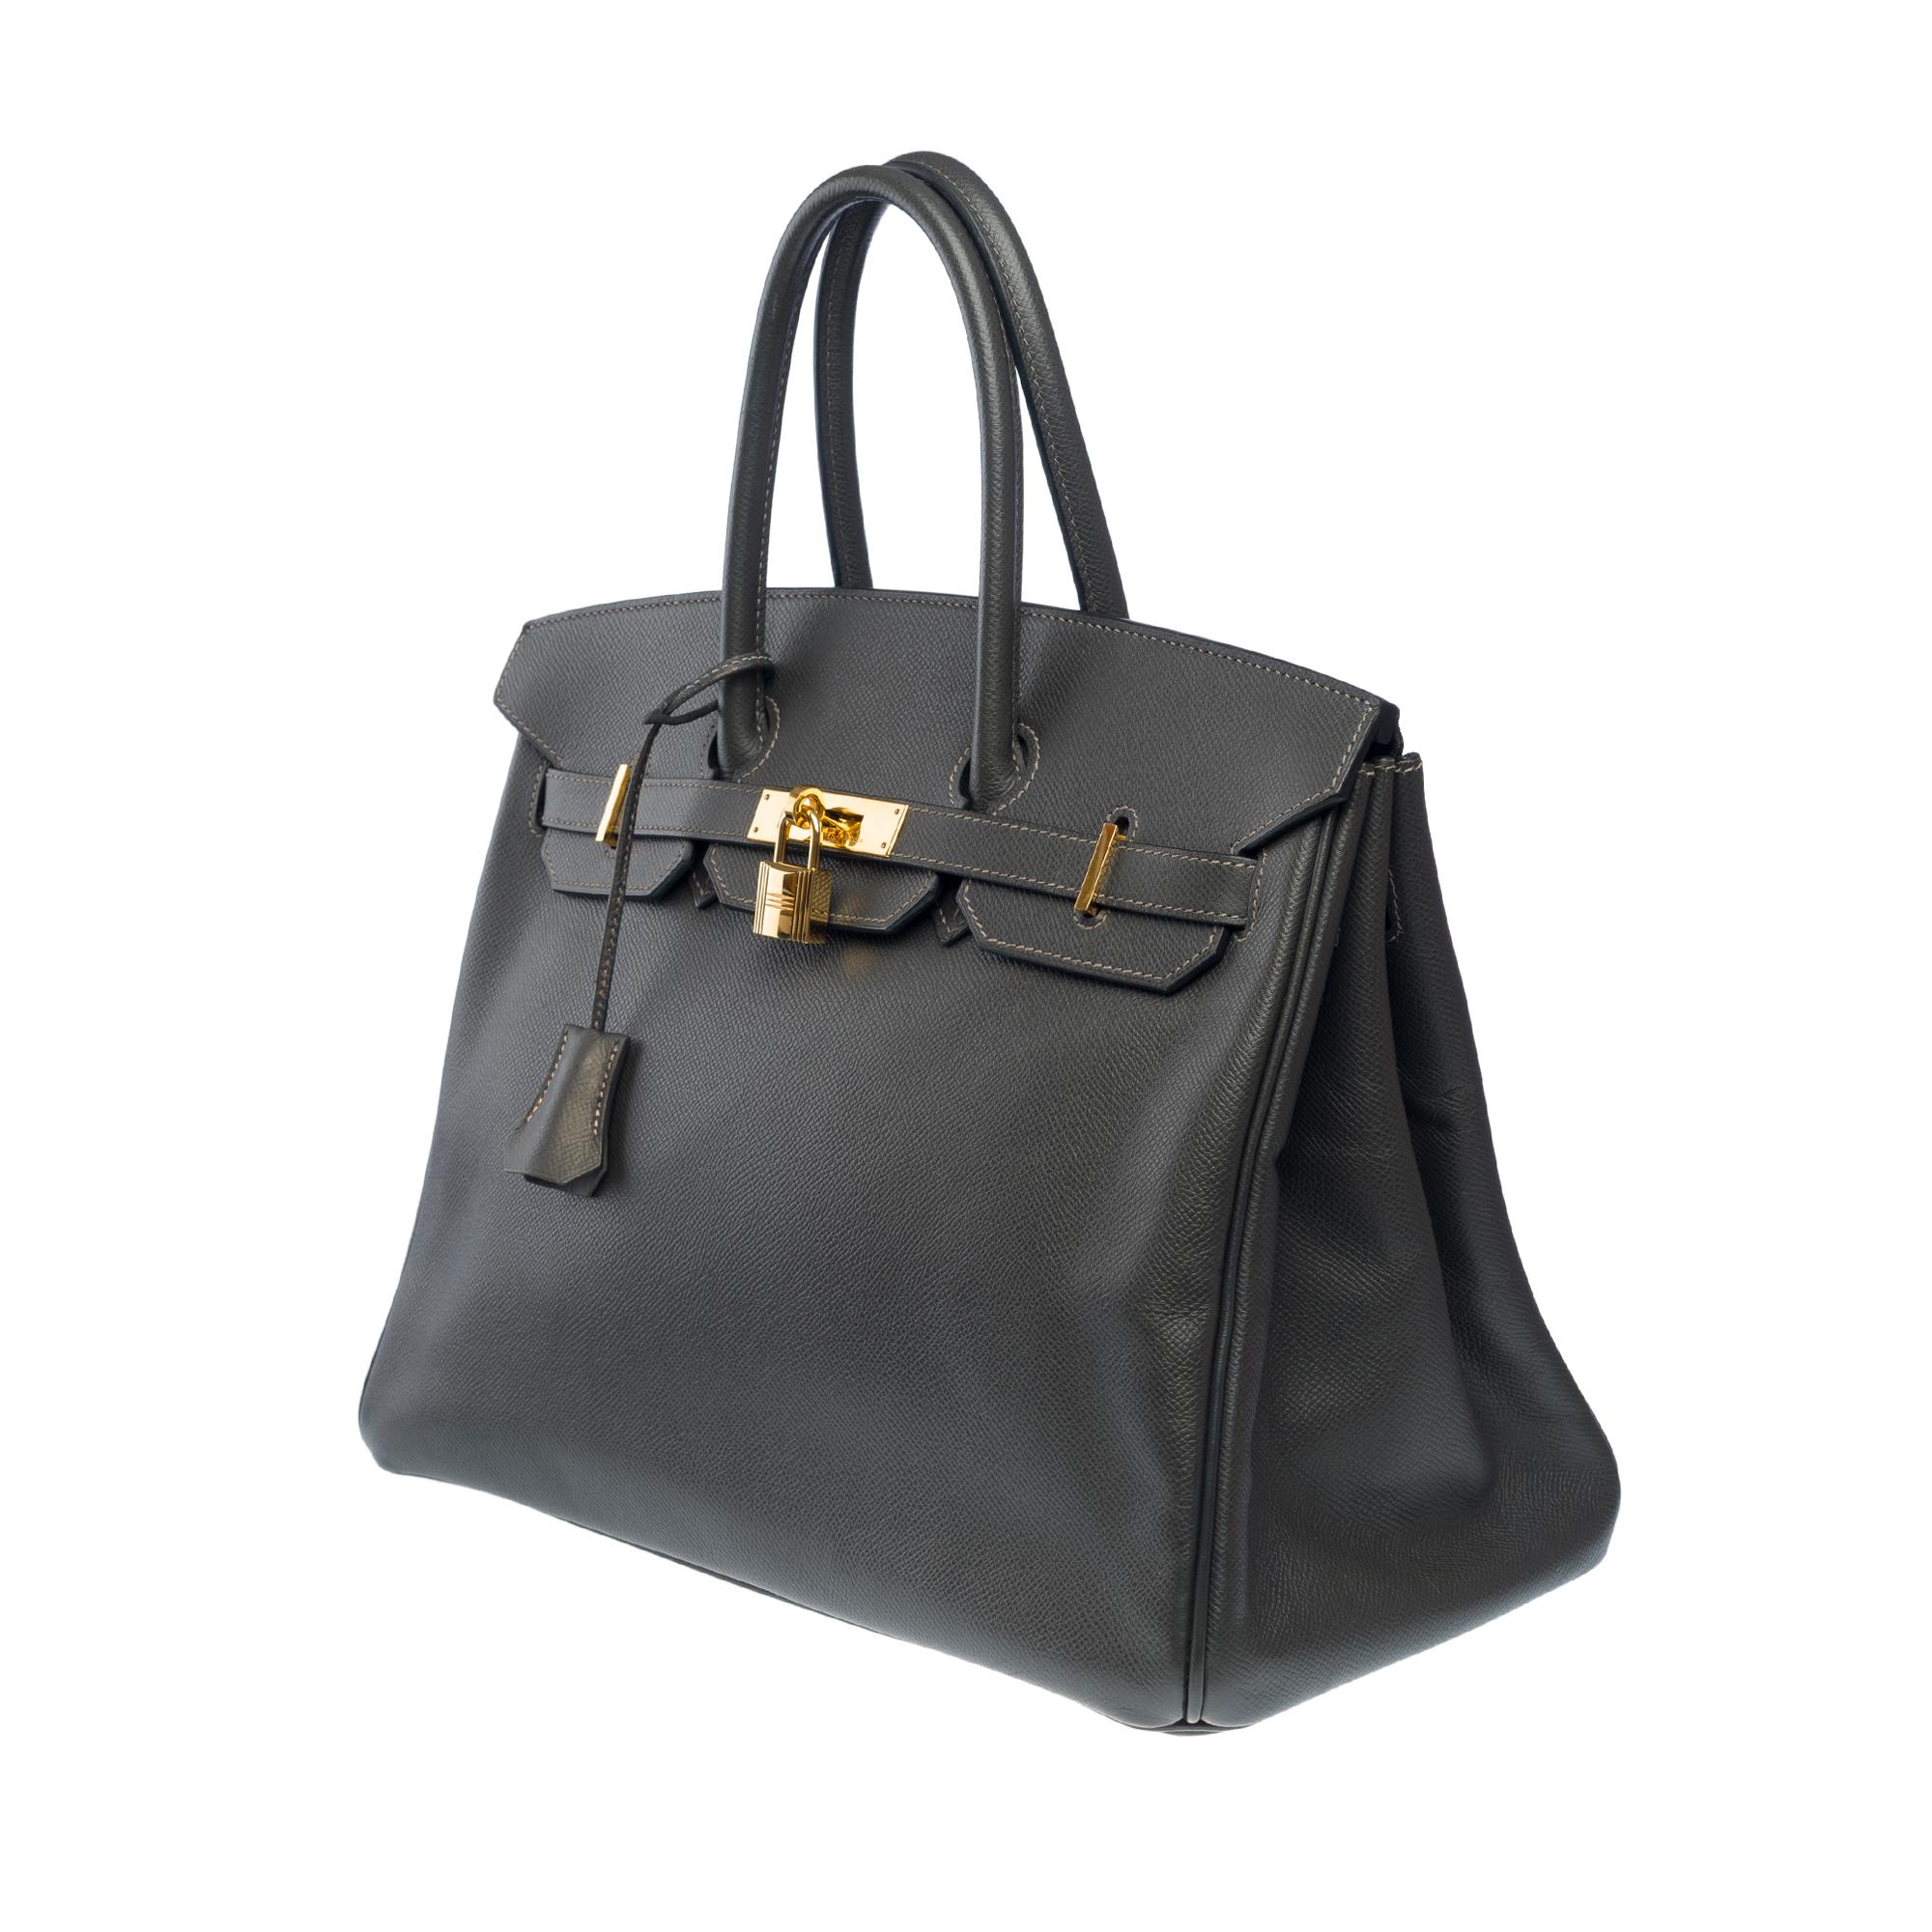 Amazing Hermès Birkin 35 handbag in Gray Graphite Epsom leather, GHW For Sale 1